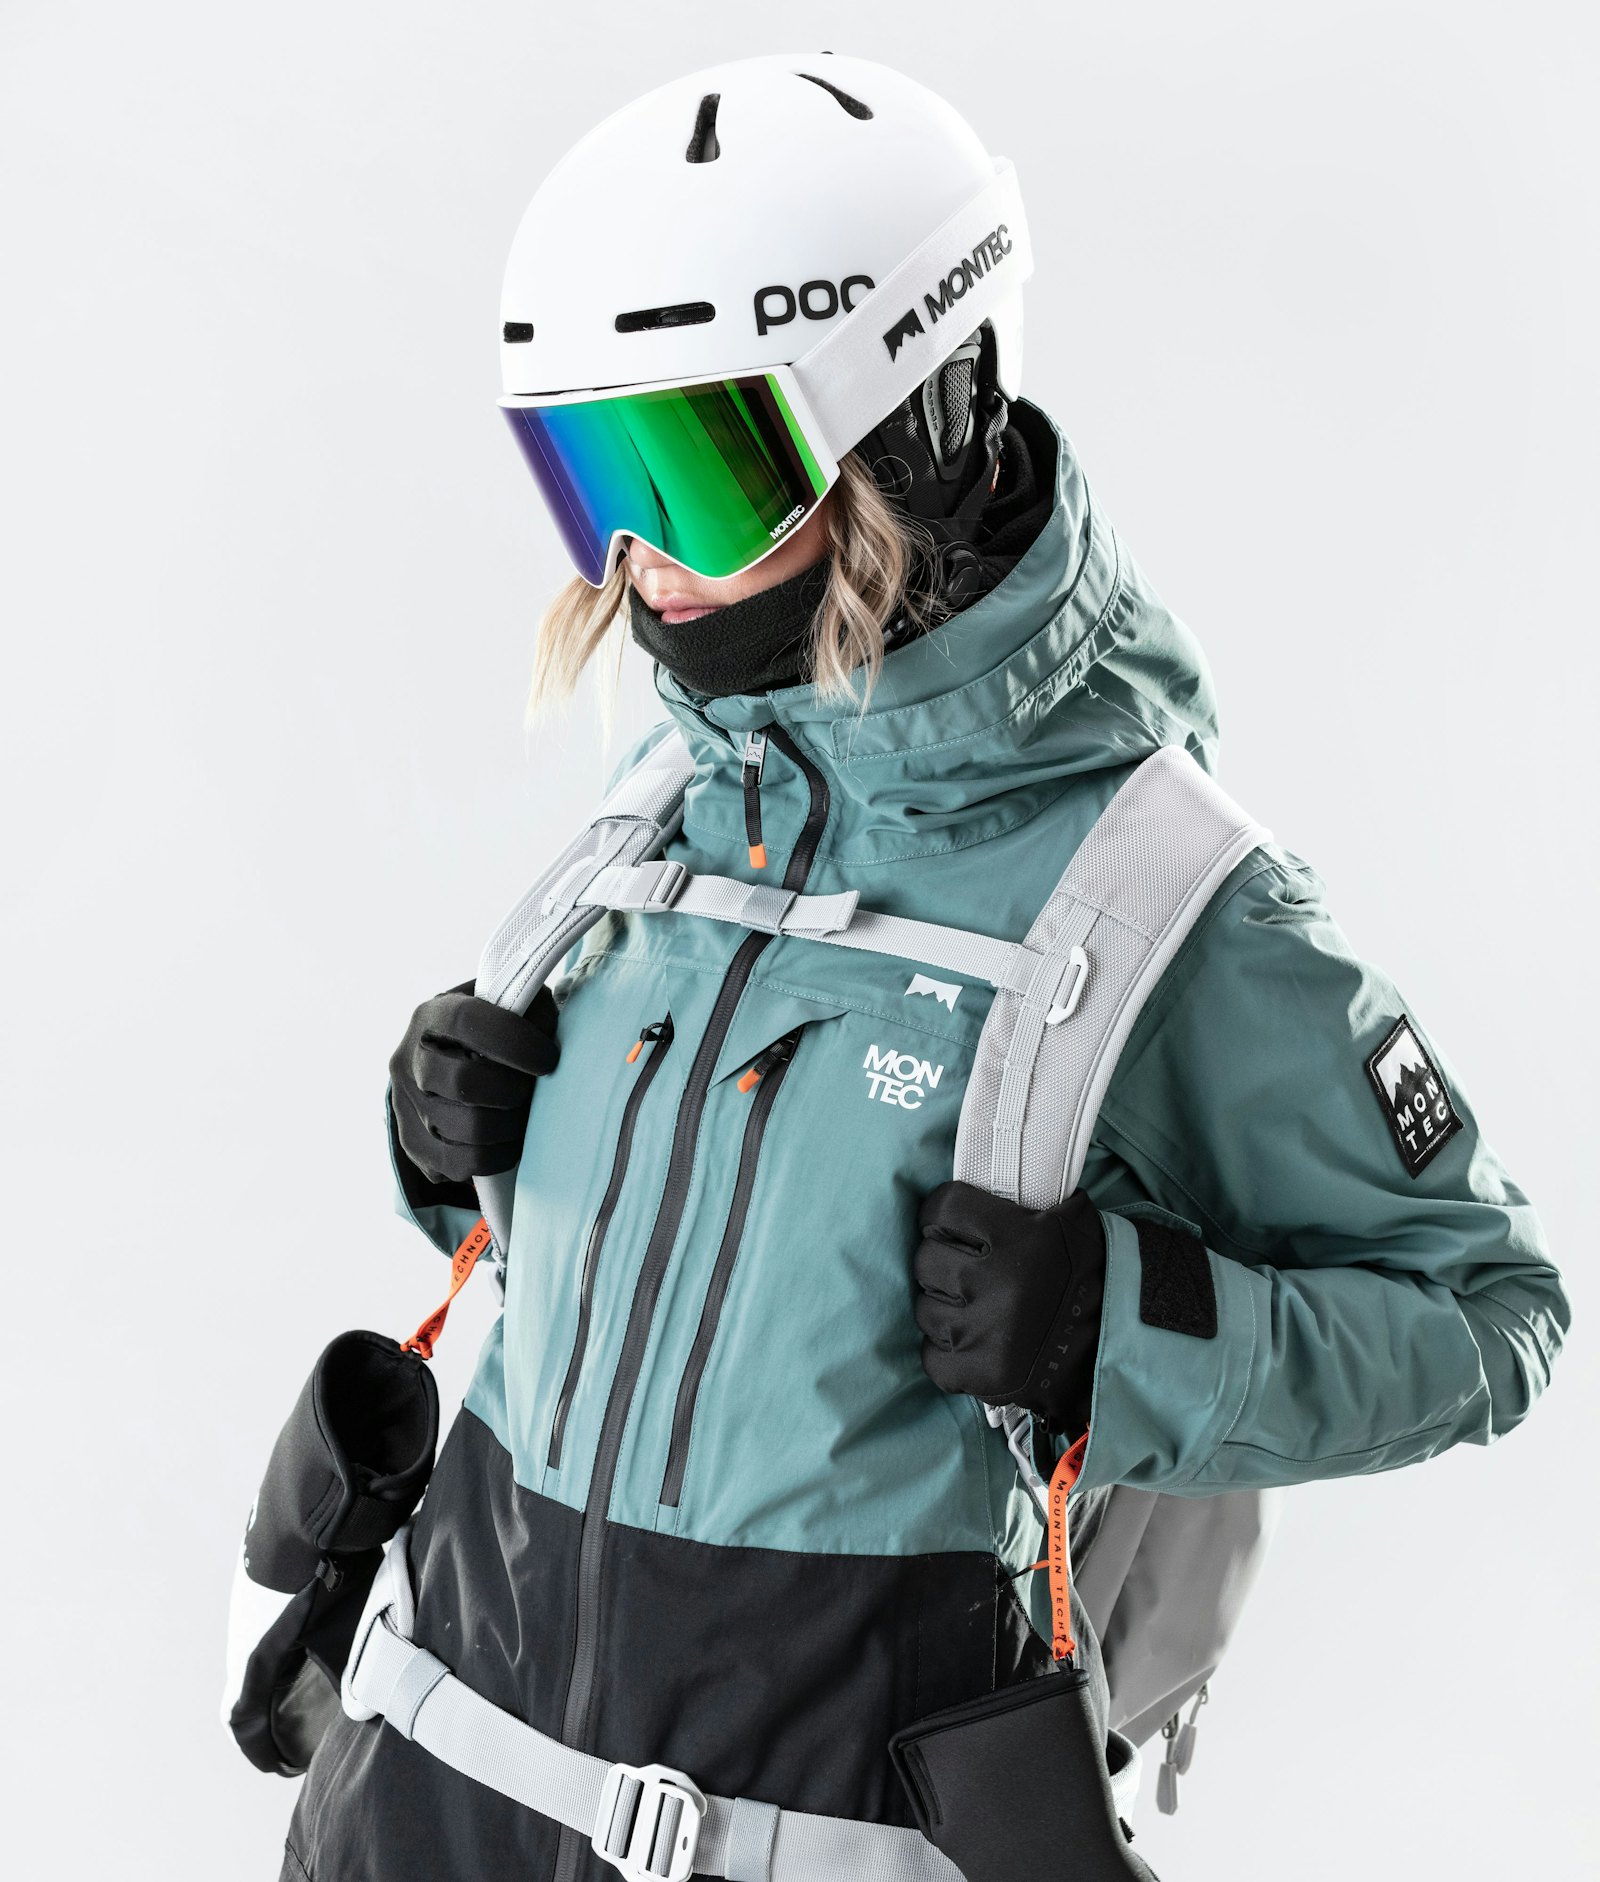 Moss W 2020 Veste Snowboard Femme Atlantic/Black